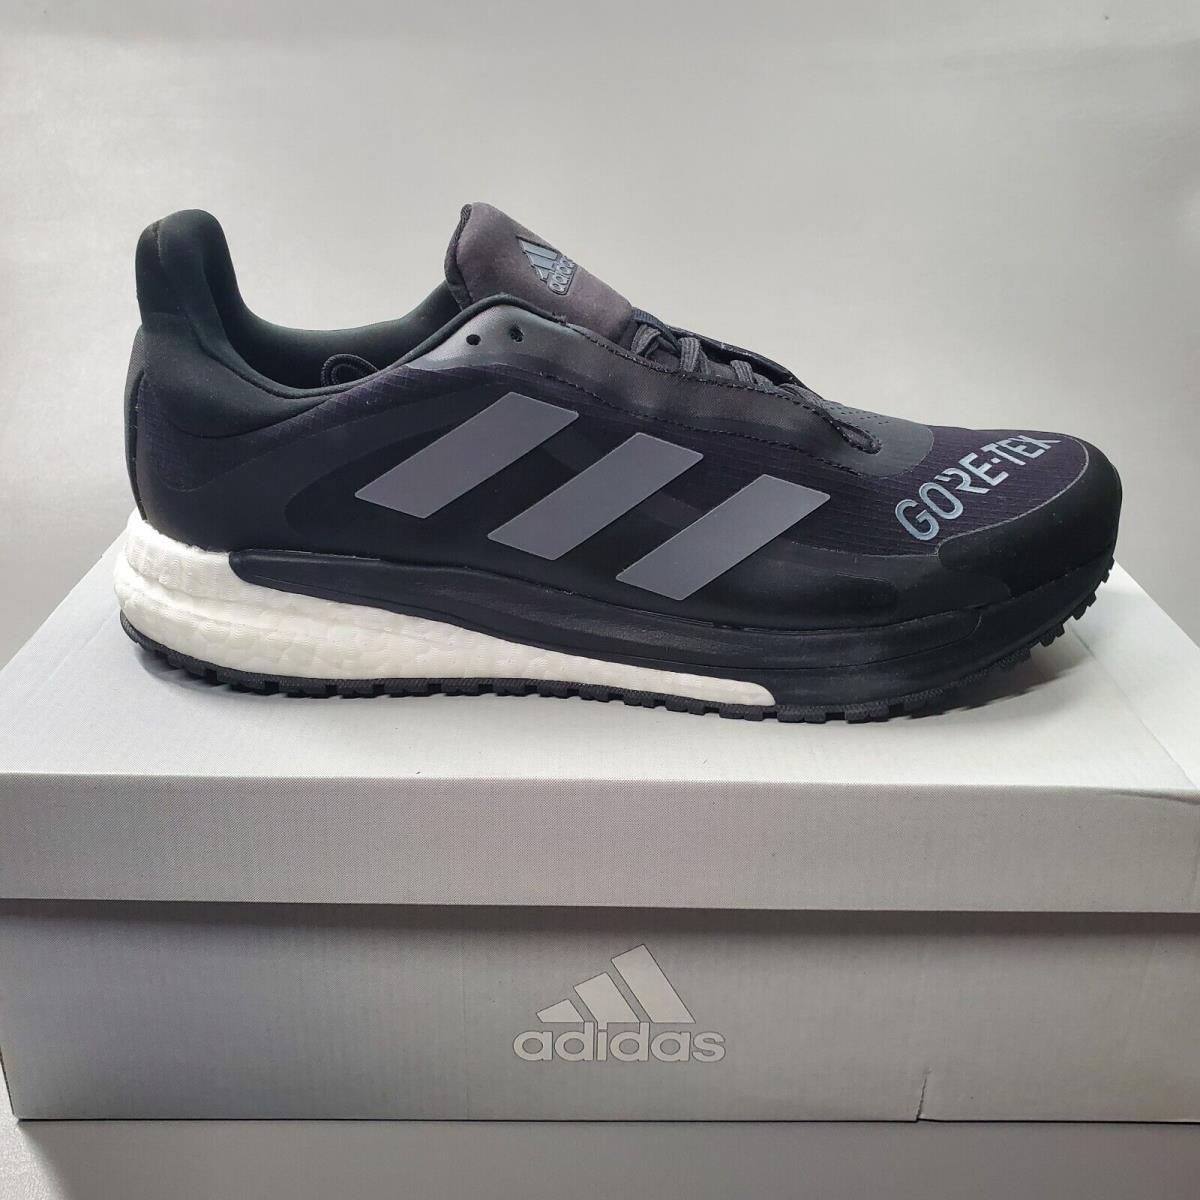 Adidas shoes Solar Glide - Black 2